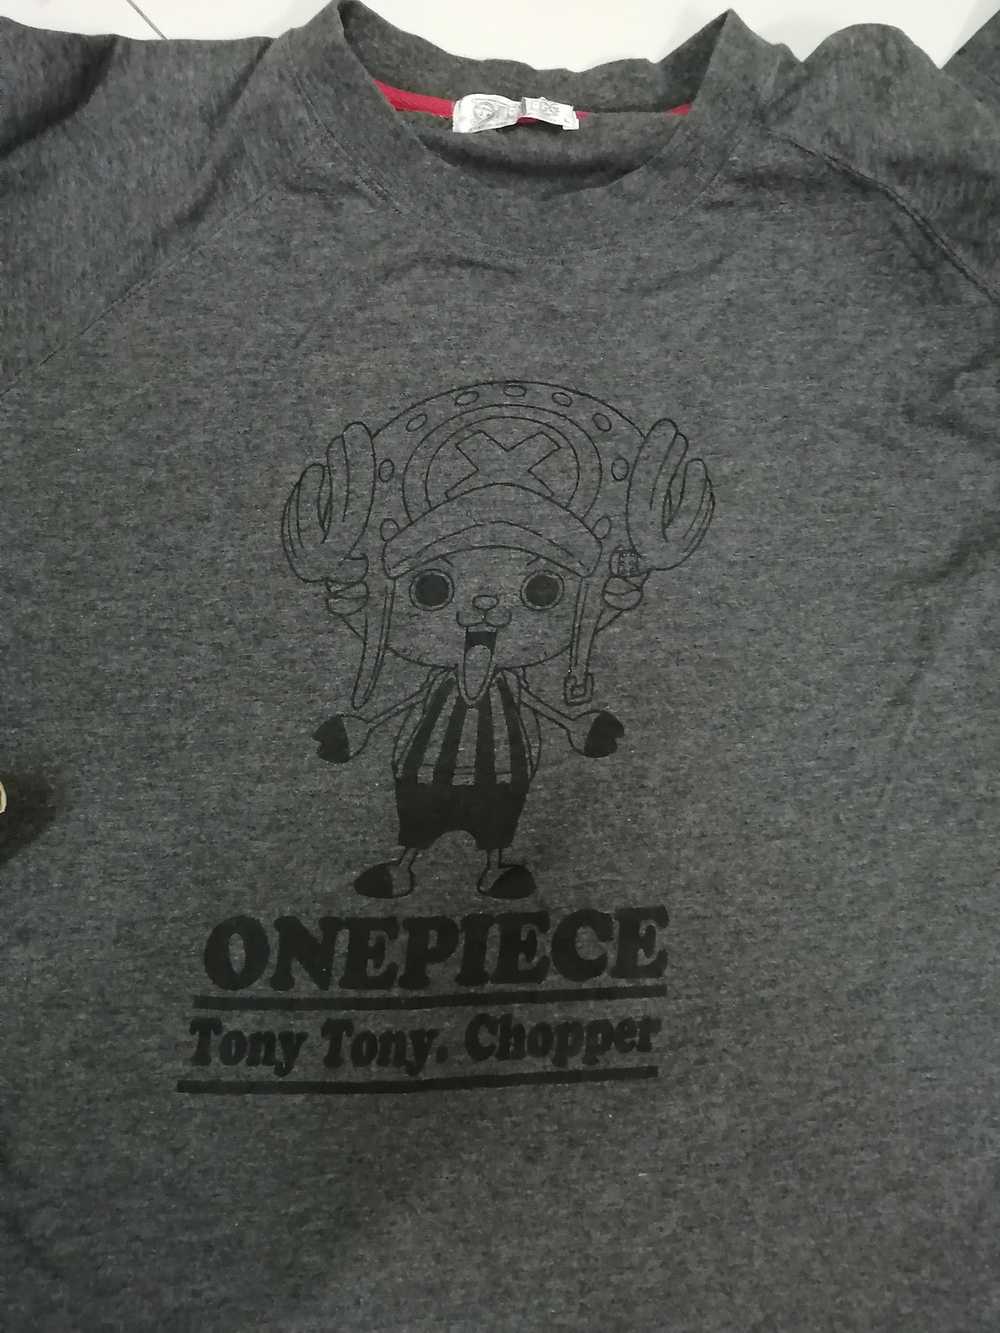 Chopaa (つ≧▽≦)つ, #onepiece #chopper, one piece chopper